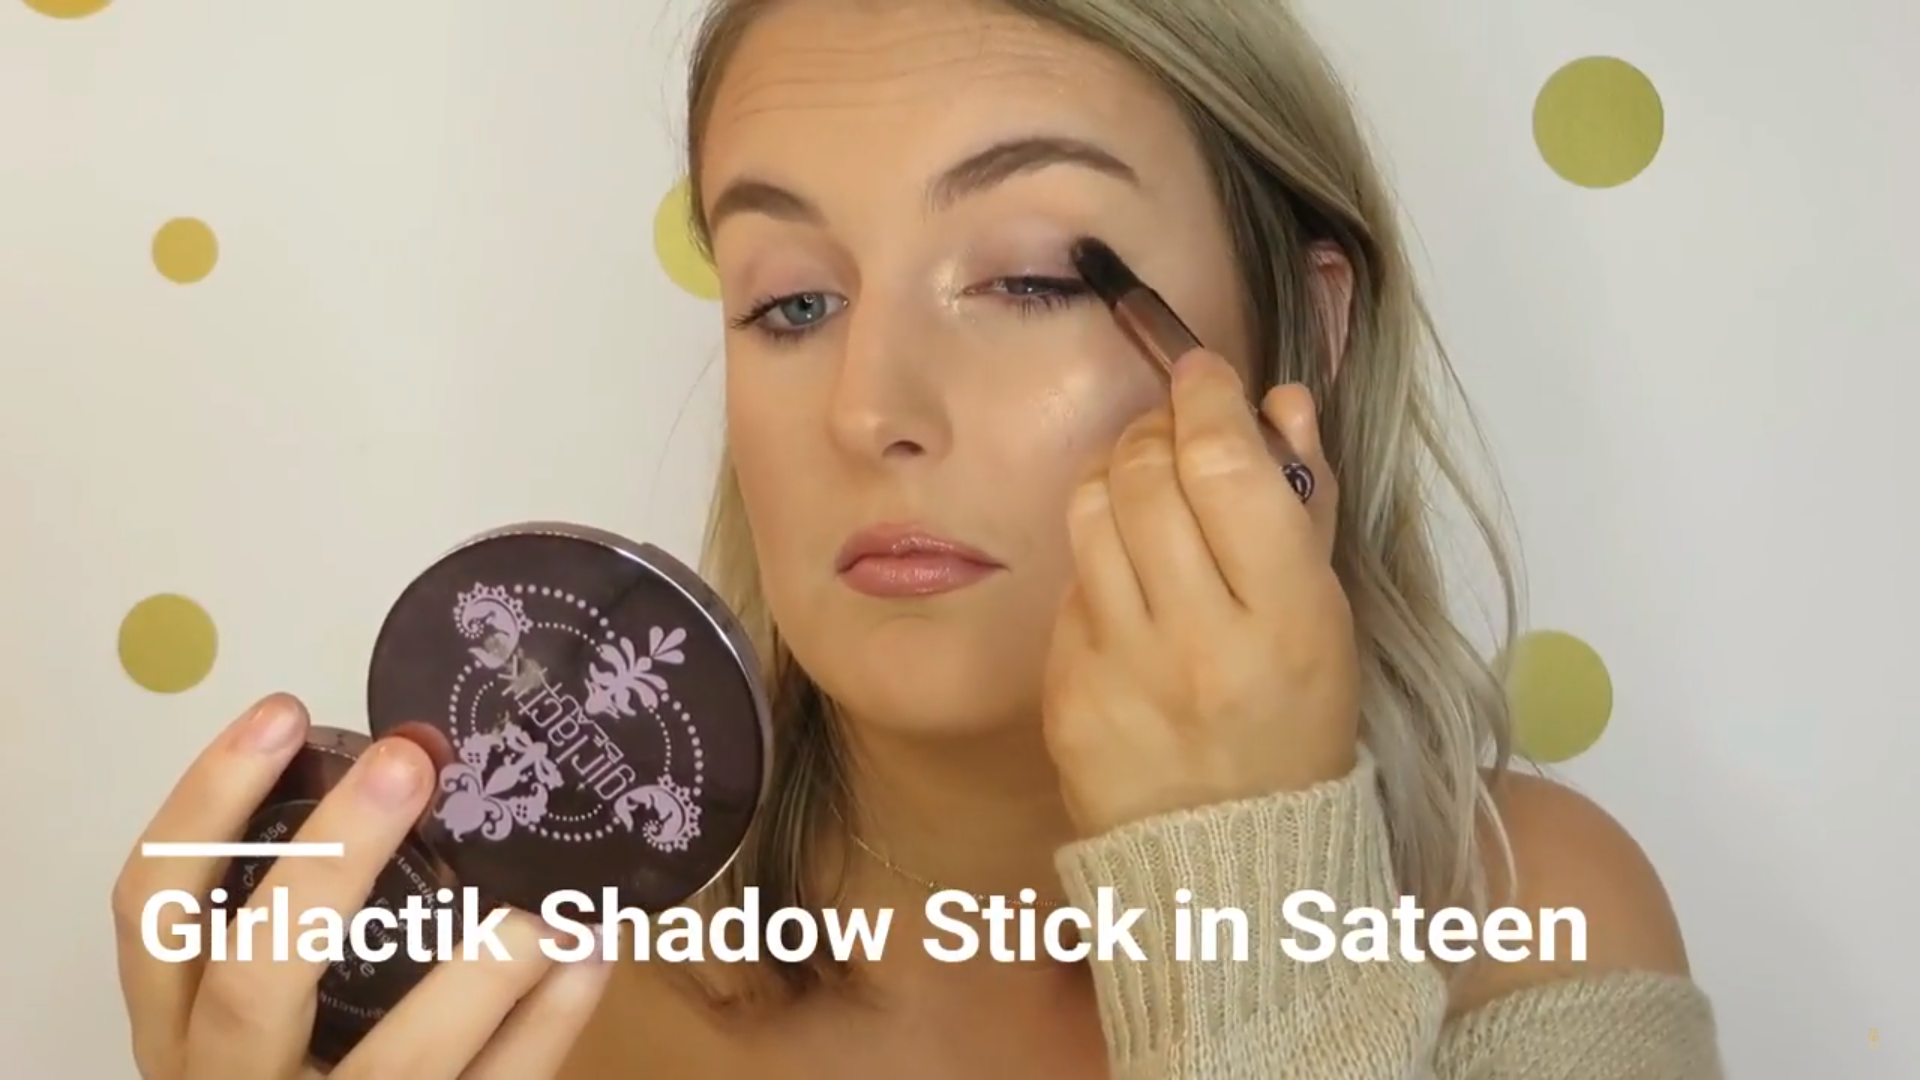 VIDEO: Day to Night with Girlactik Metallic Shadow Sticks